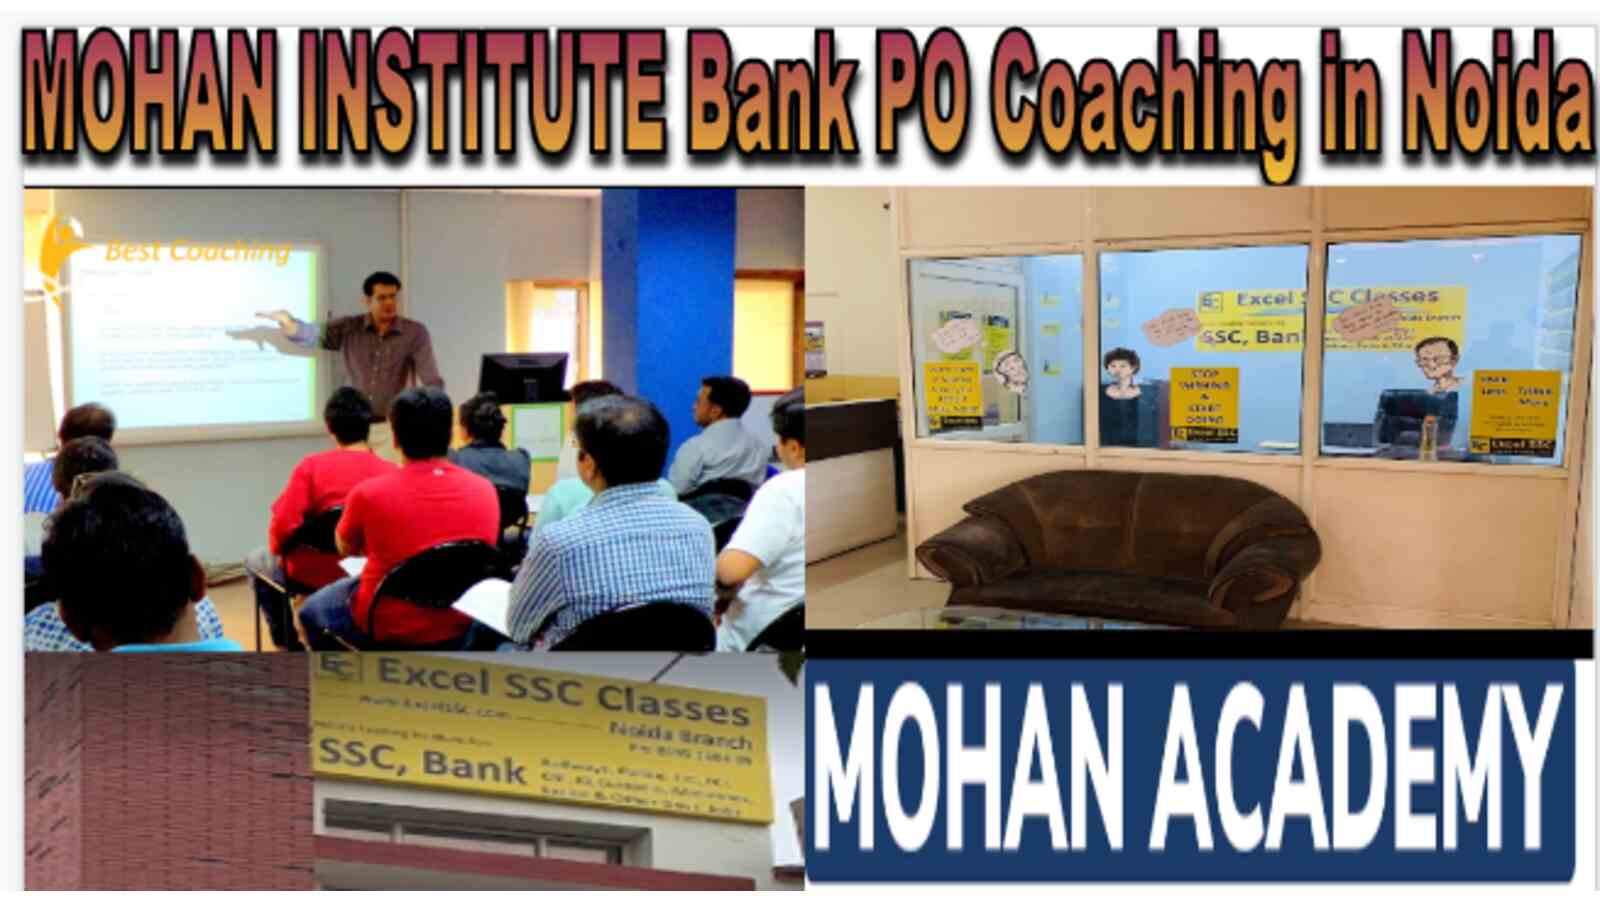 MOHAN INSTITUTE Bank PO Coaching in Noida